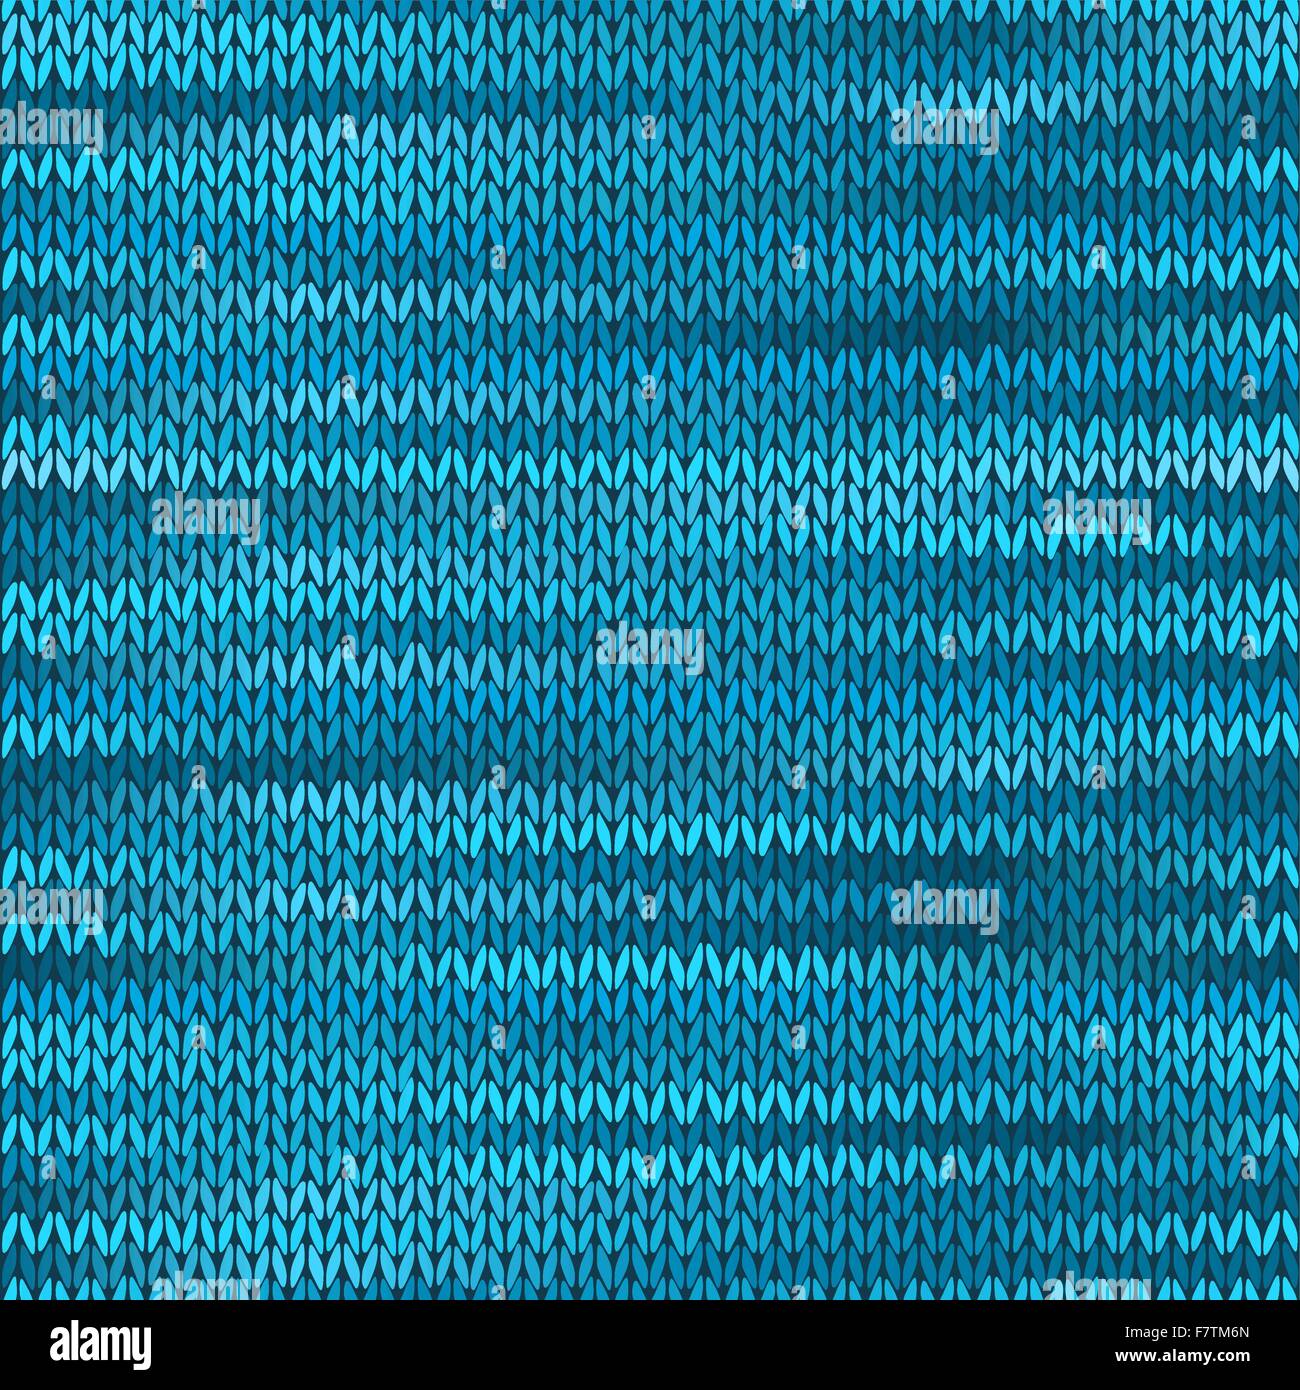 Seamless Knitted Melange Pattern. Blue Turquoise Black White Col Stock Vector